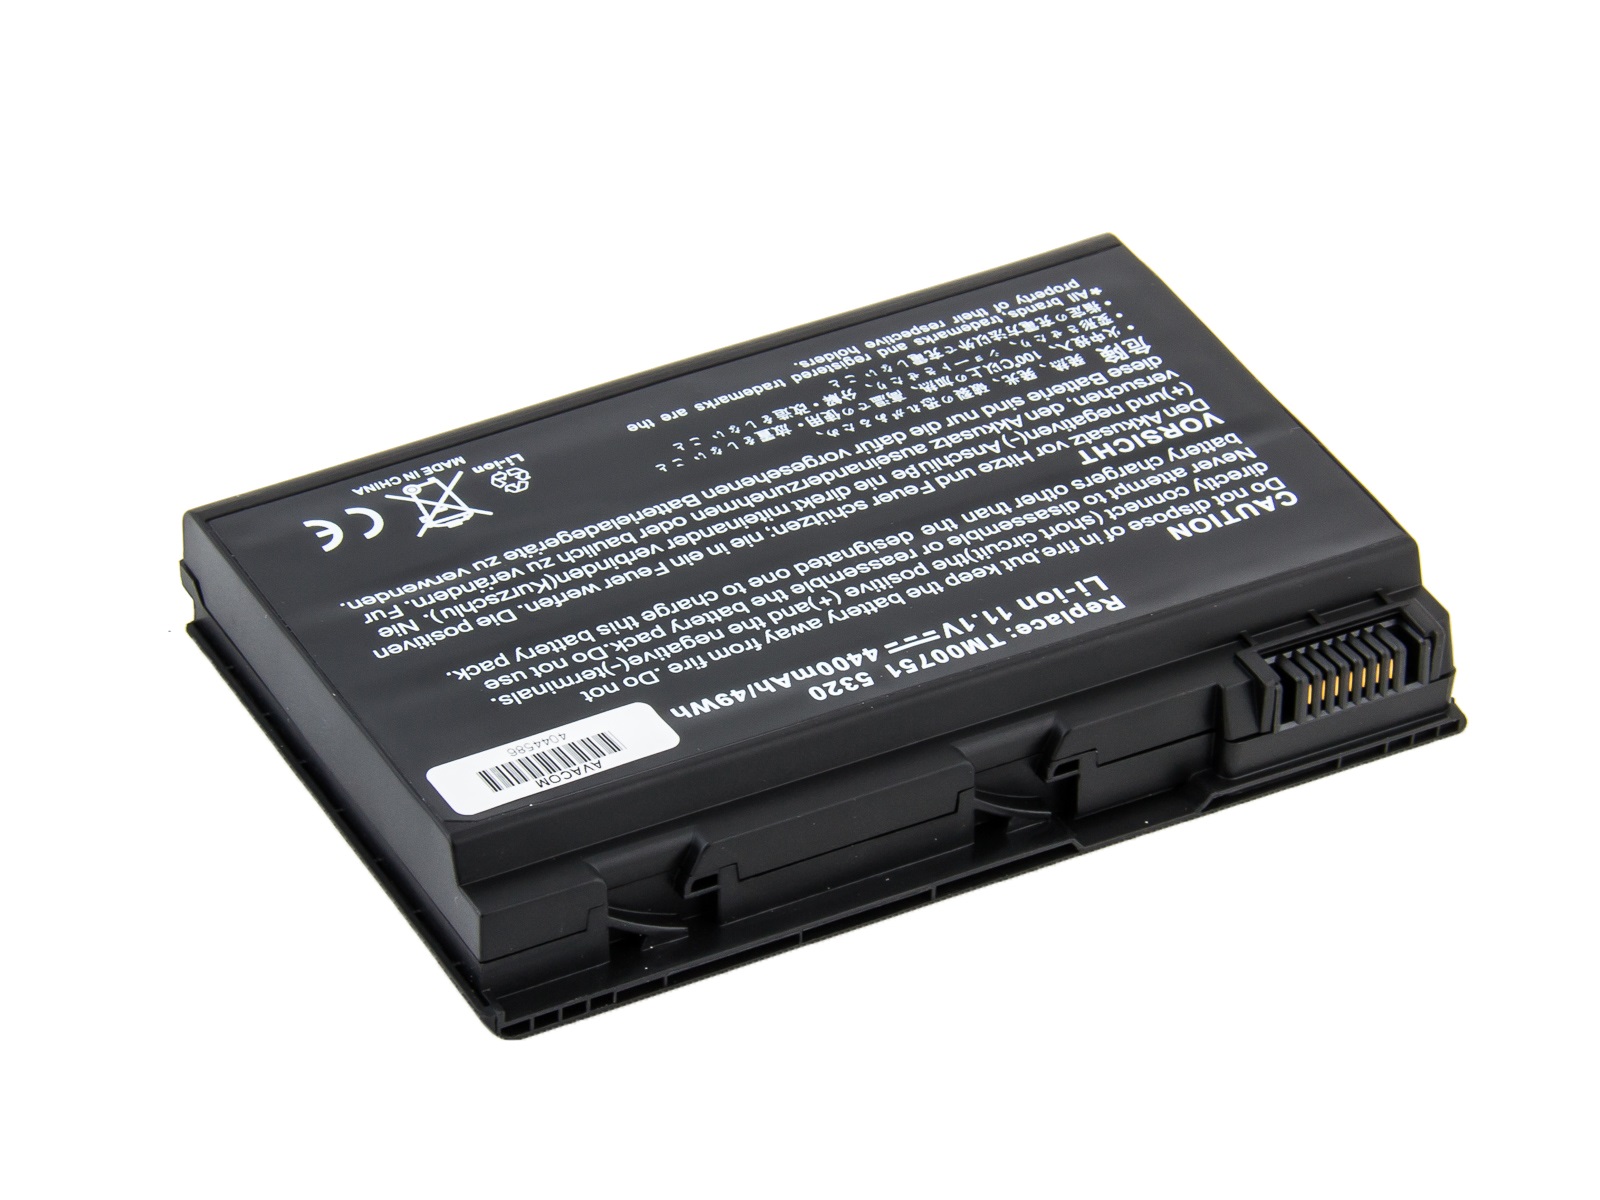 Baterie AVACOM pro Acer TravelMate 5320/5720, Extensa 5220/5620 Li-Ion 10,8V 4400mAh